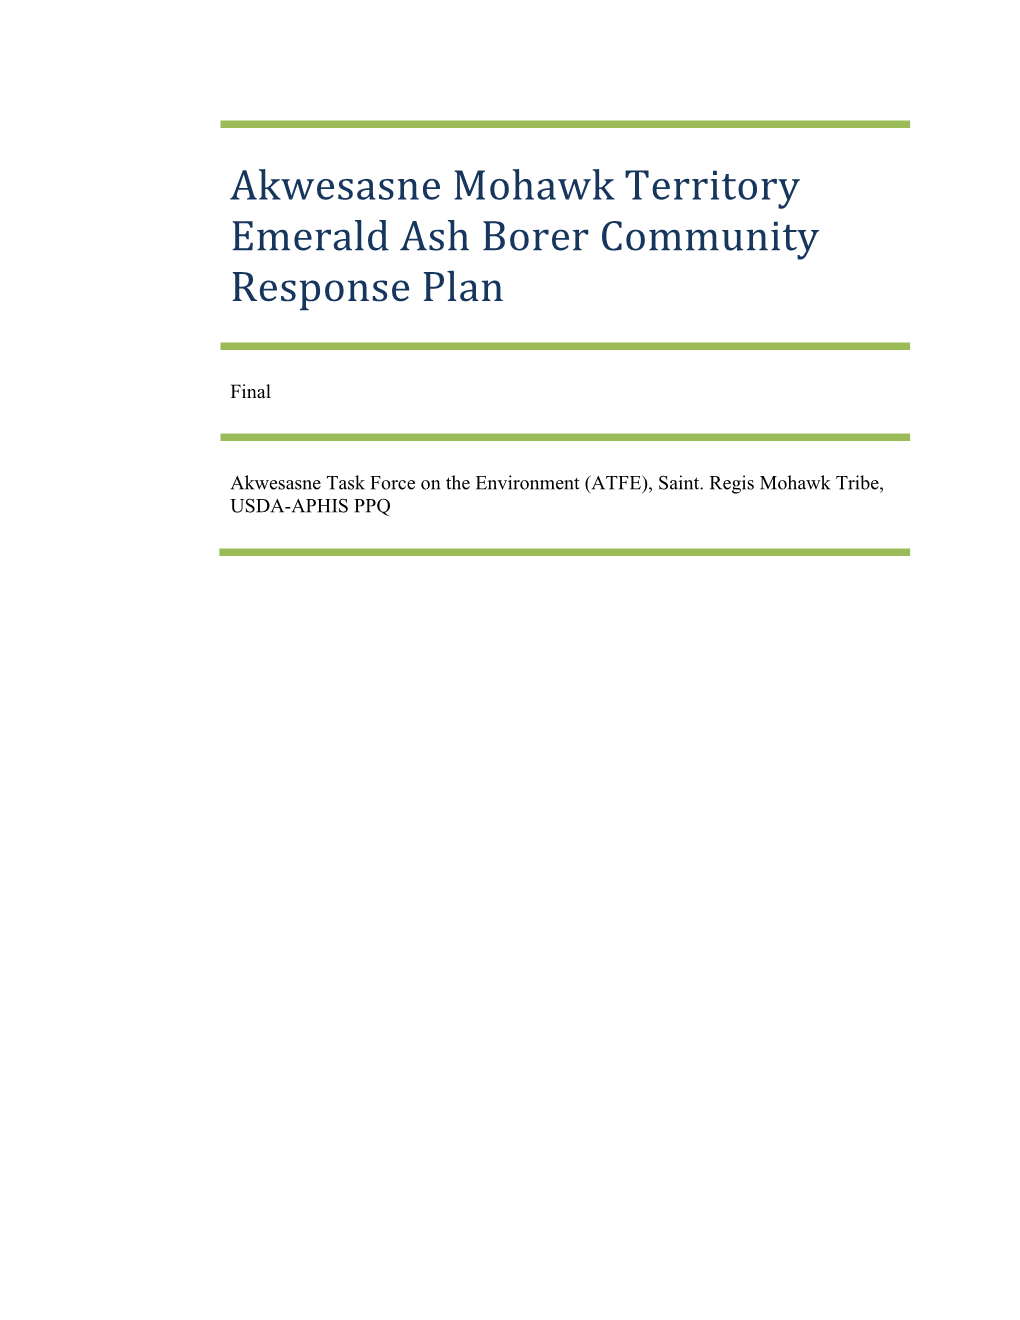 Akwesasne Mohawk Territory Emerald Ash Borer Community Response